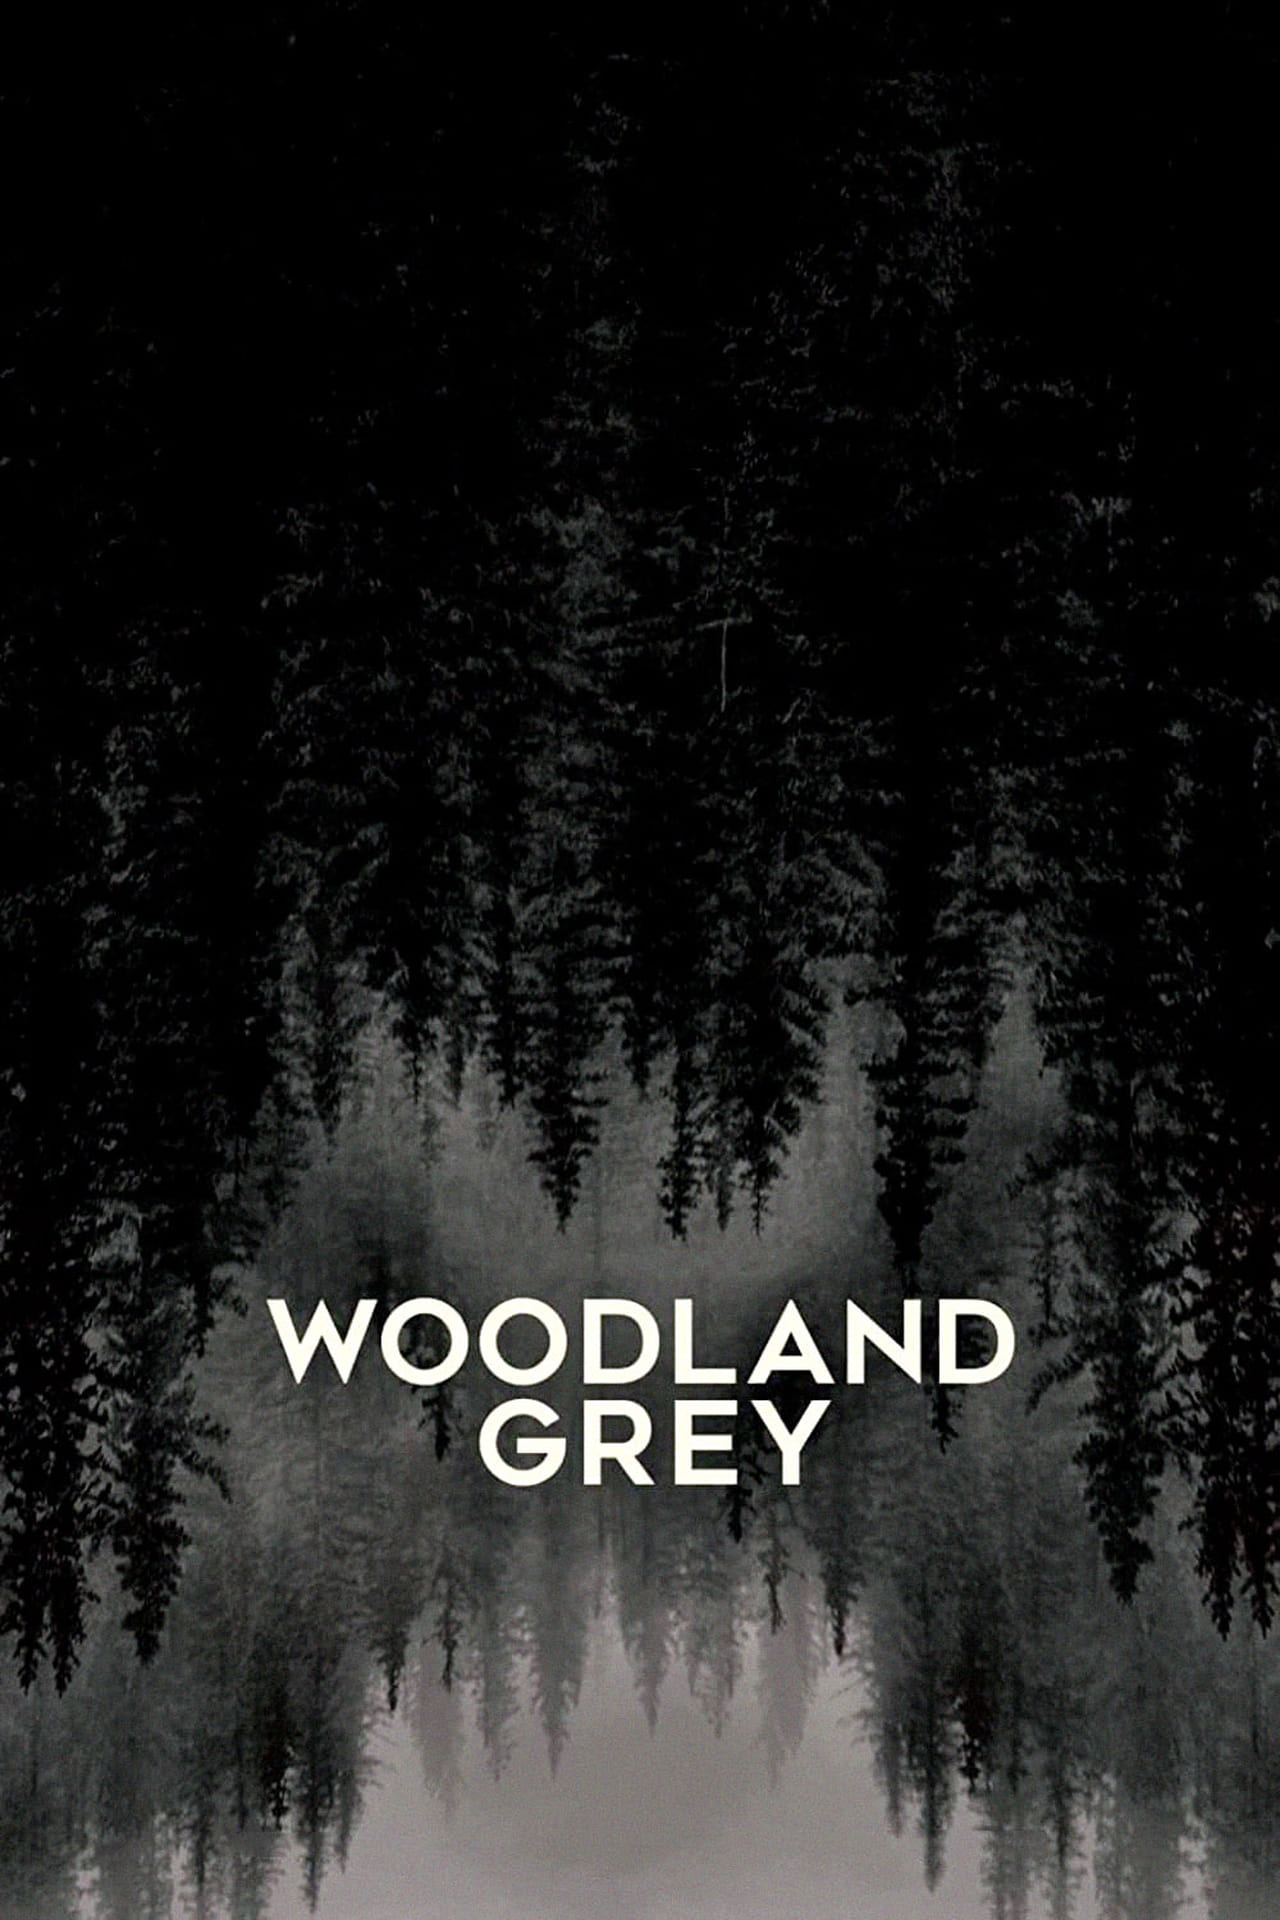 Woodland Grey Dublado Online